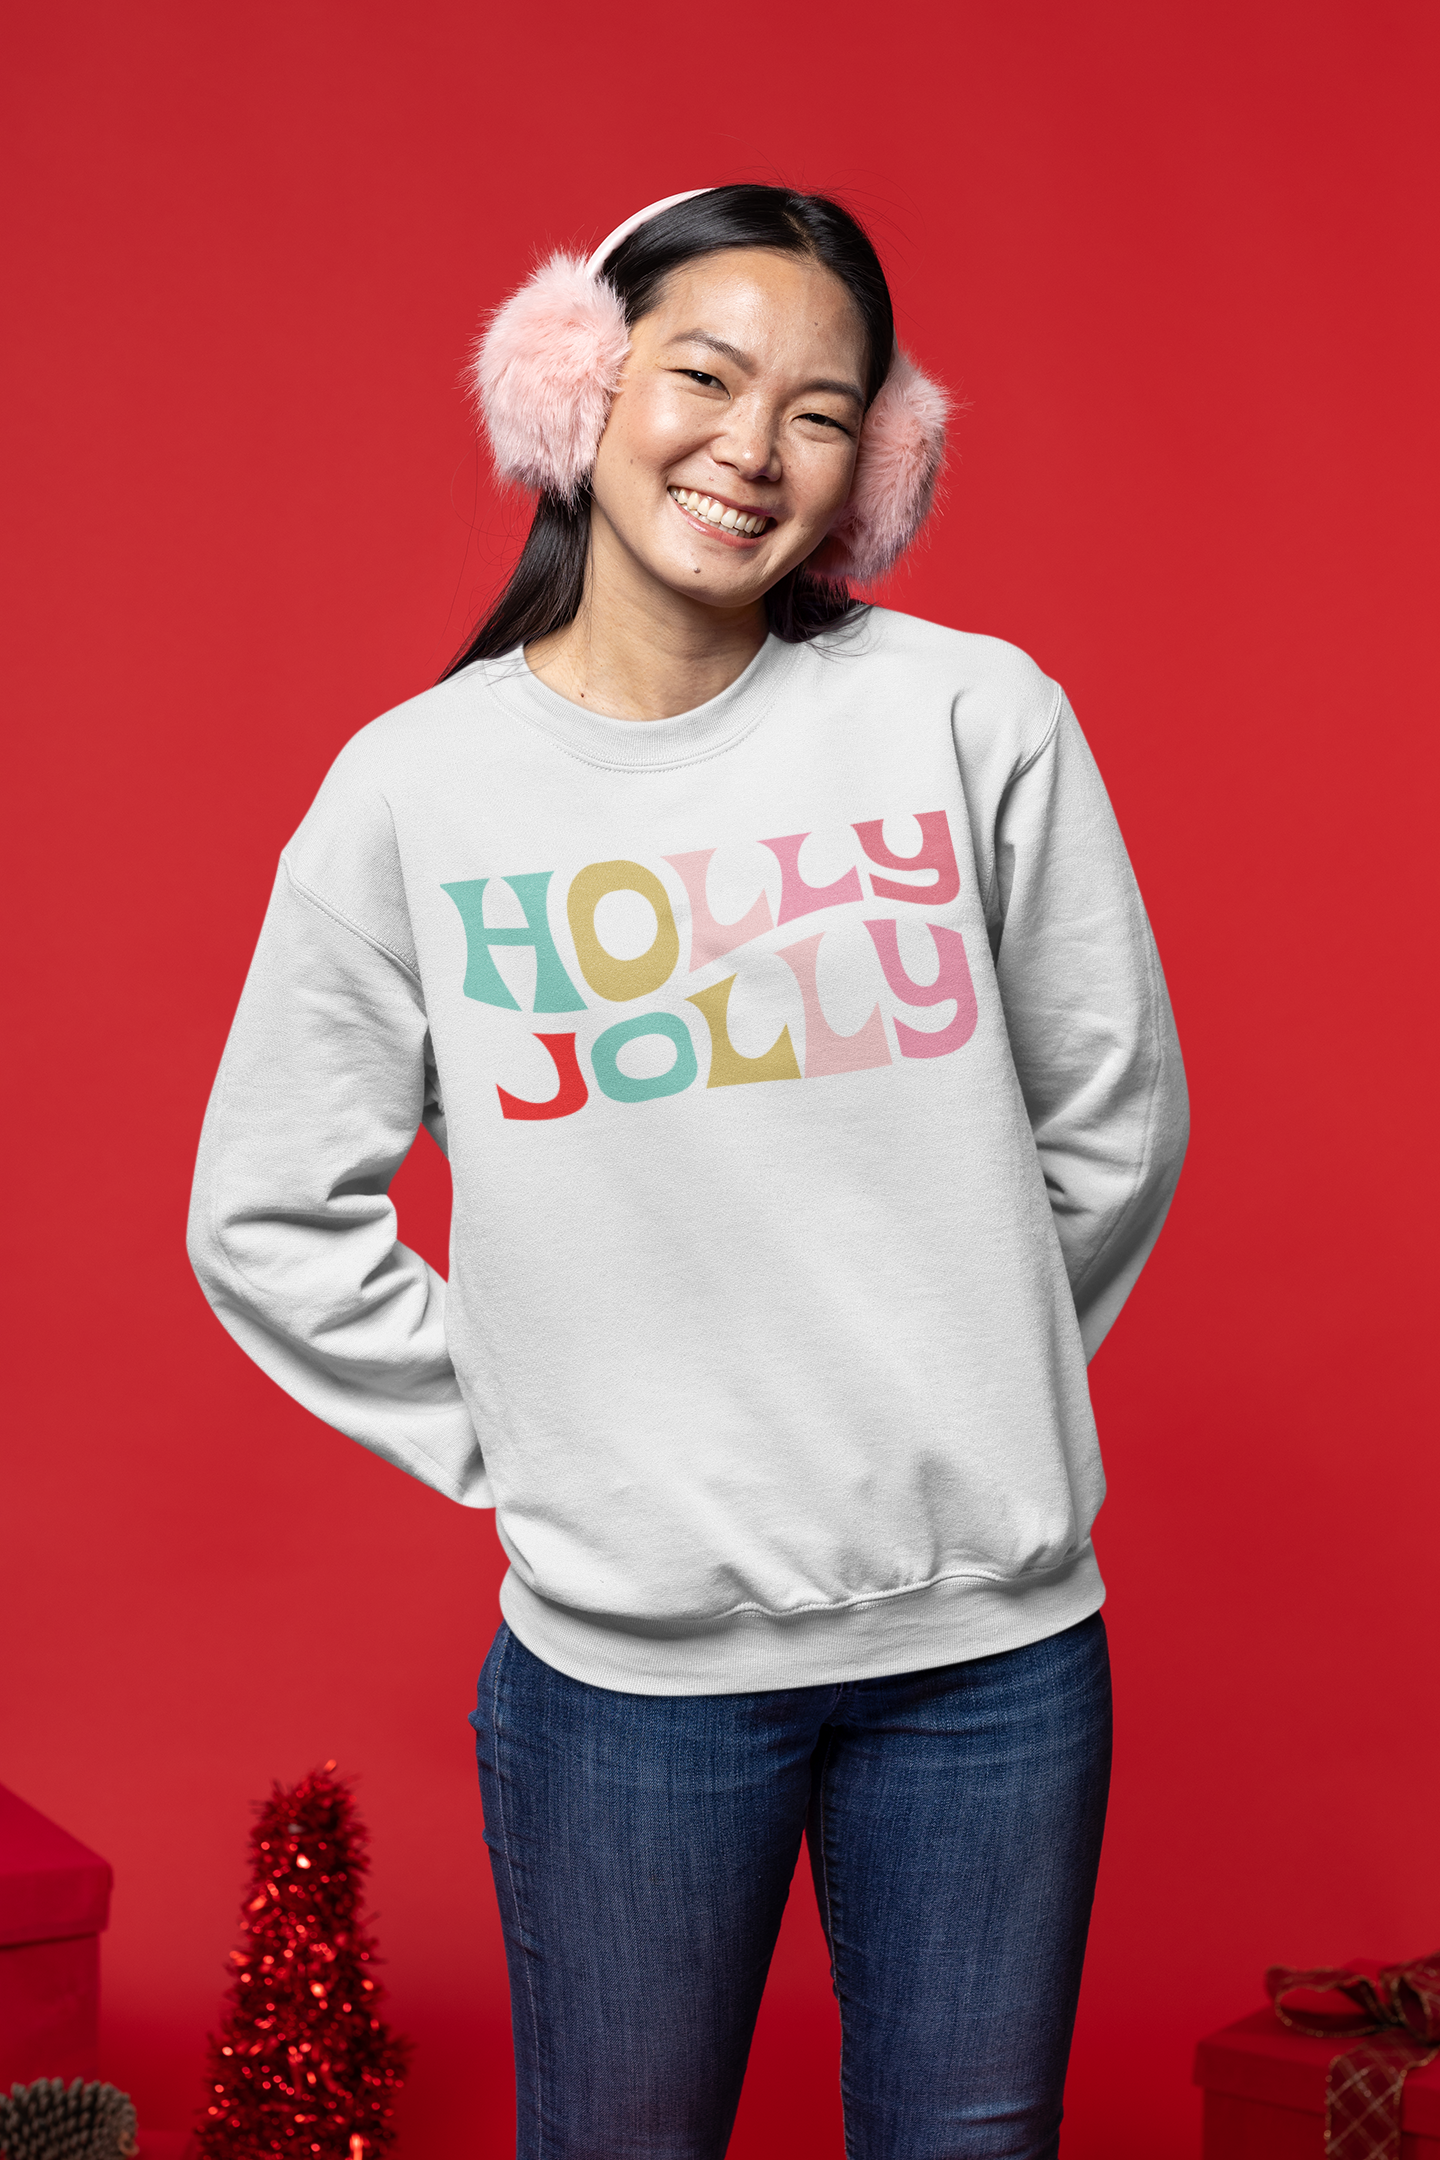 Holly Jolly Groovy Sweatshirt Design SVG